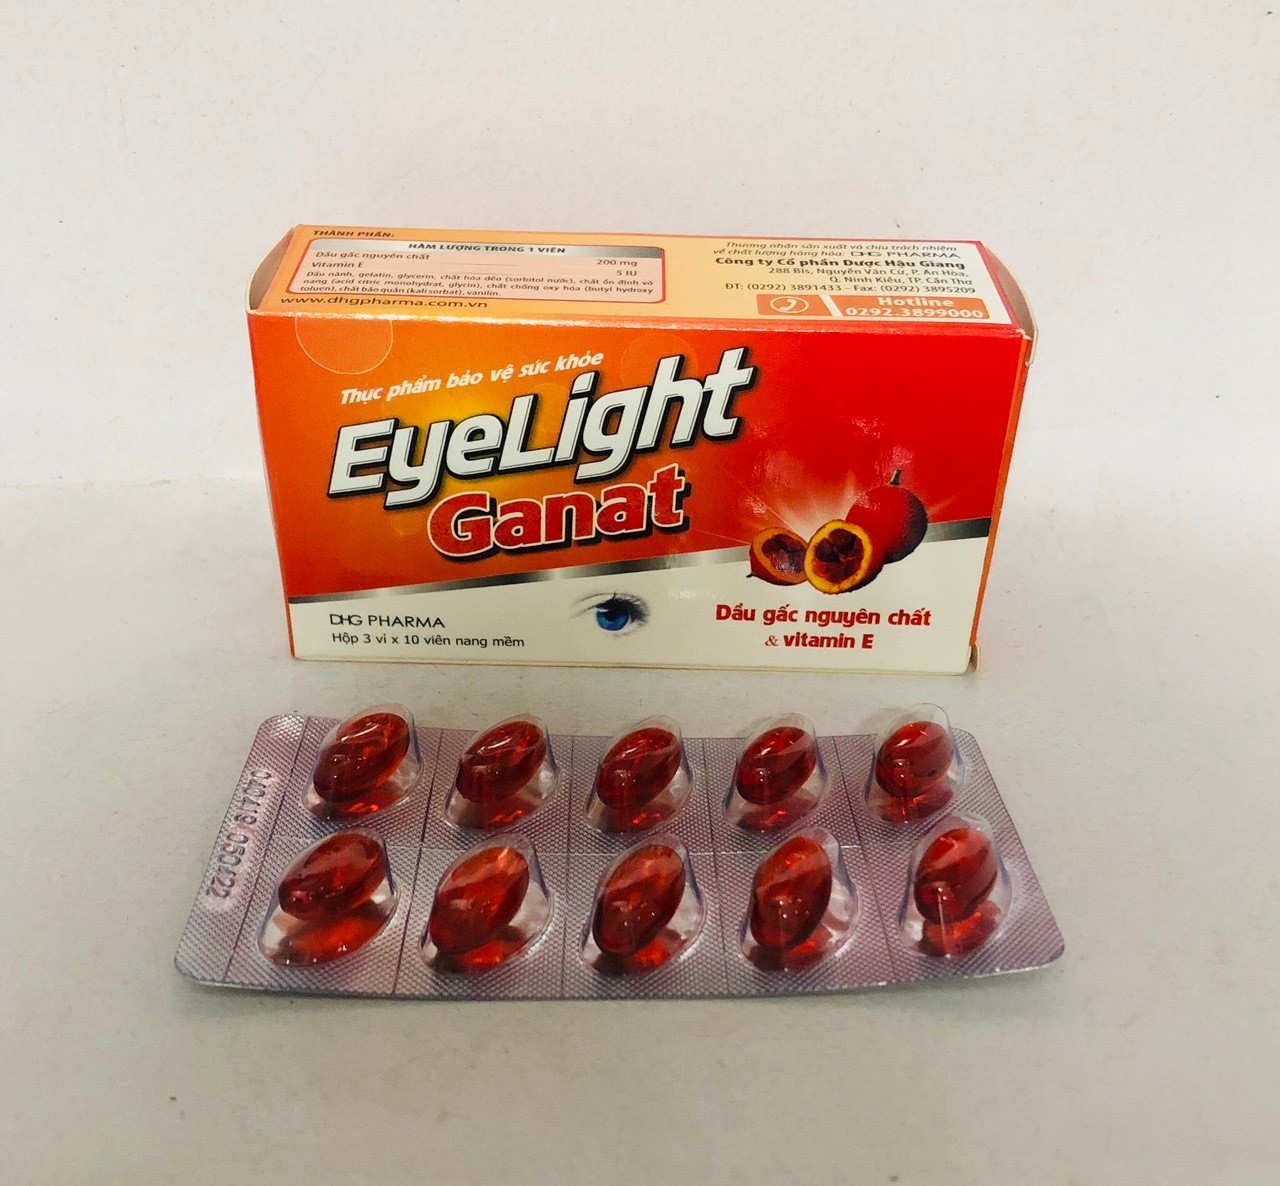 Eyelight Ganat